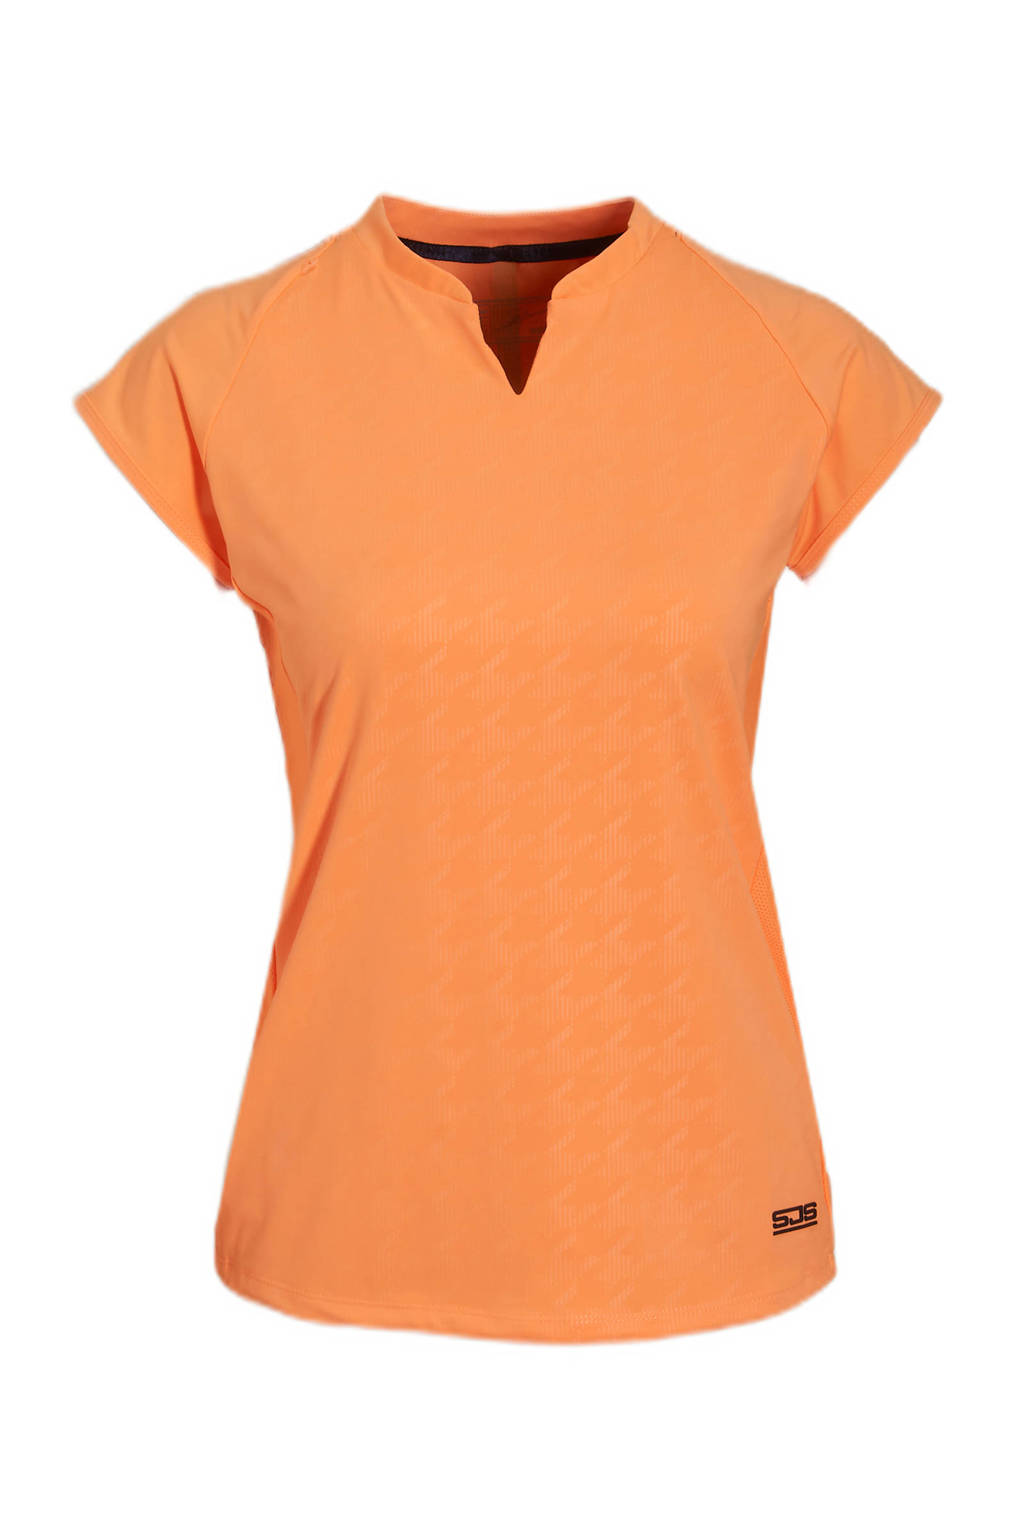 Oranje dames Sjeng Sports sporttop Honey van polyester met all over print, kapmouwtjes en V-hals